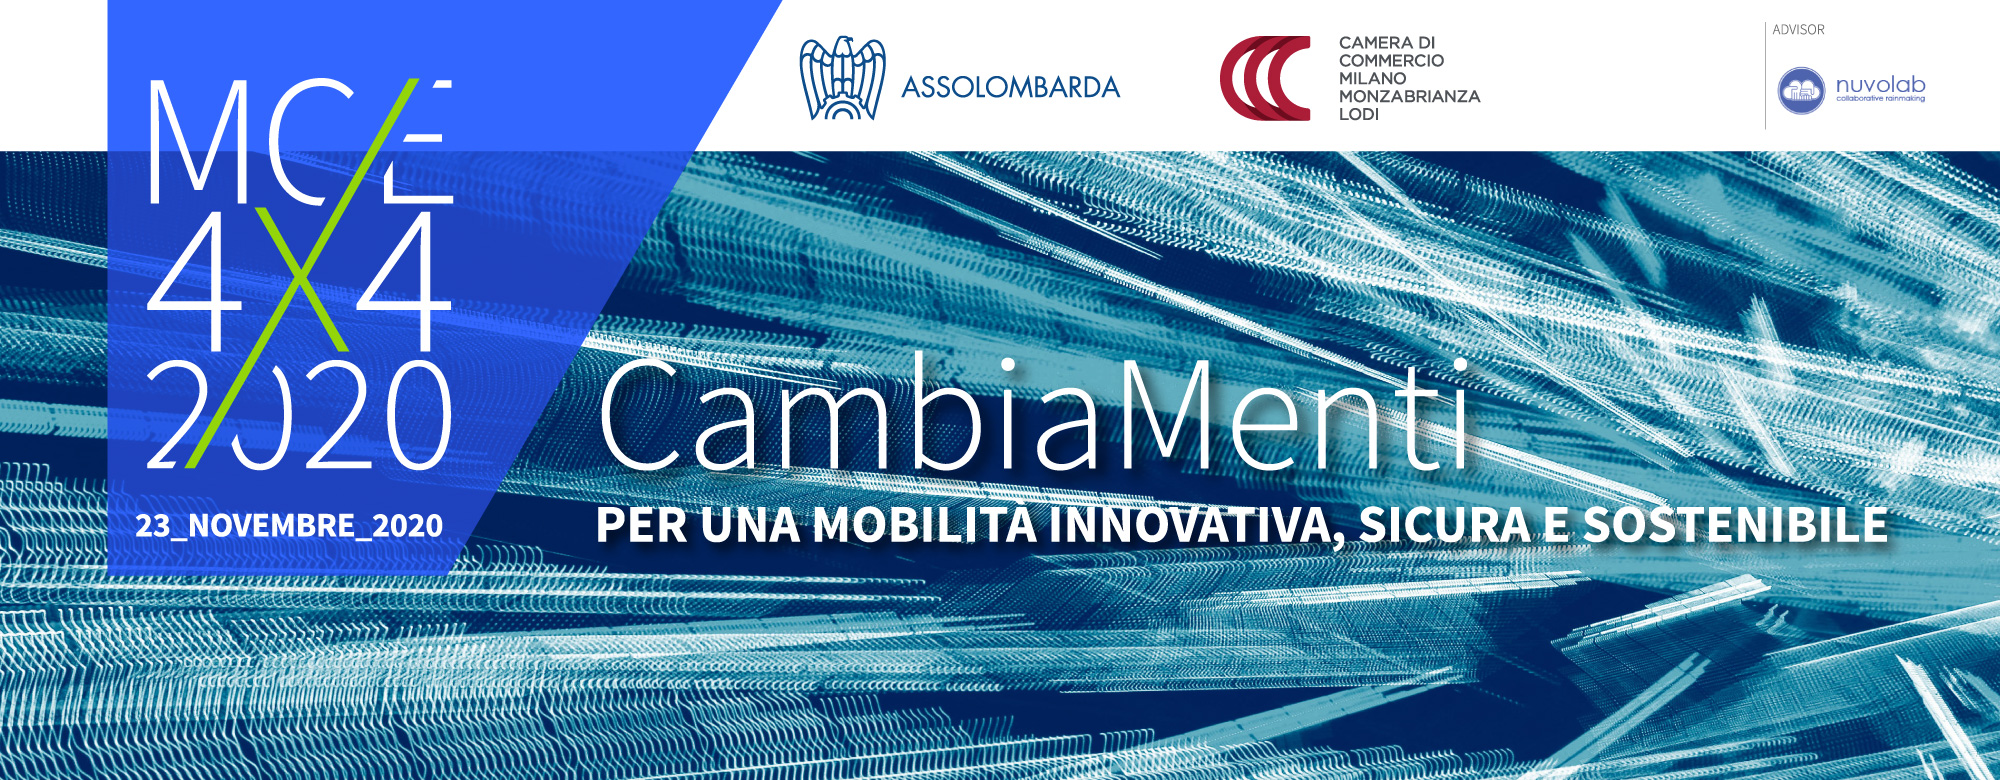 Mobility Conference Exhibition 2020 MCE4x4 - 23 novembre